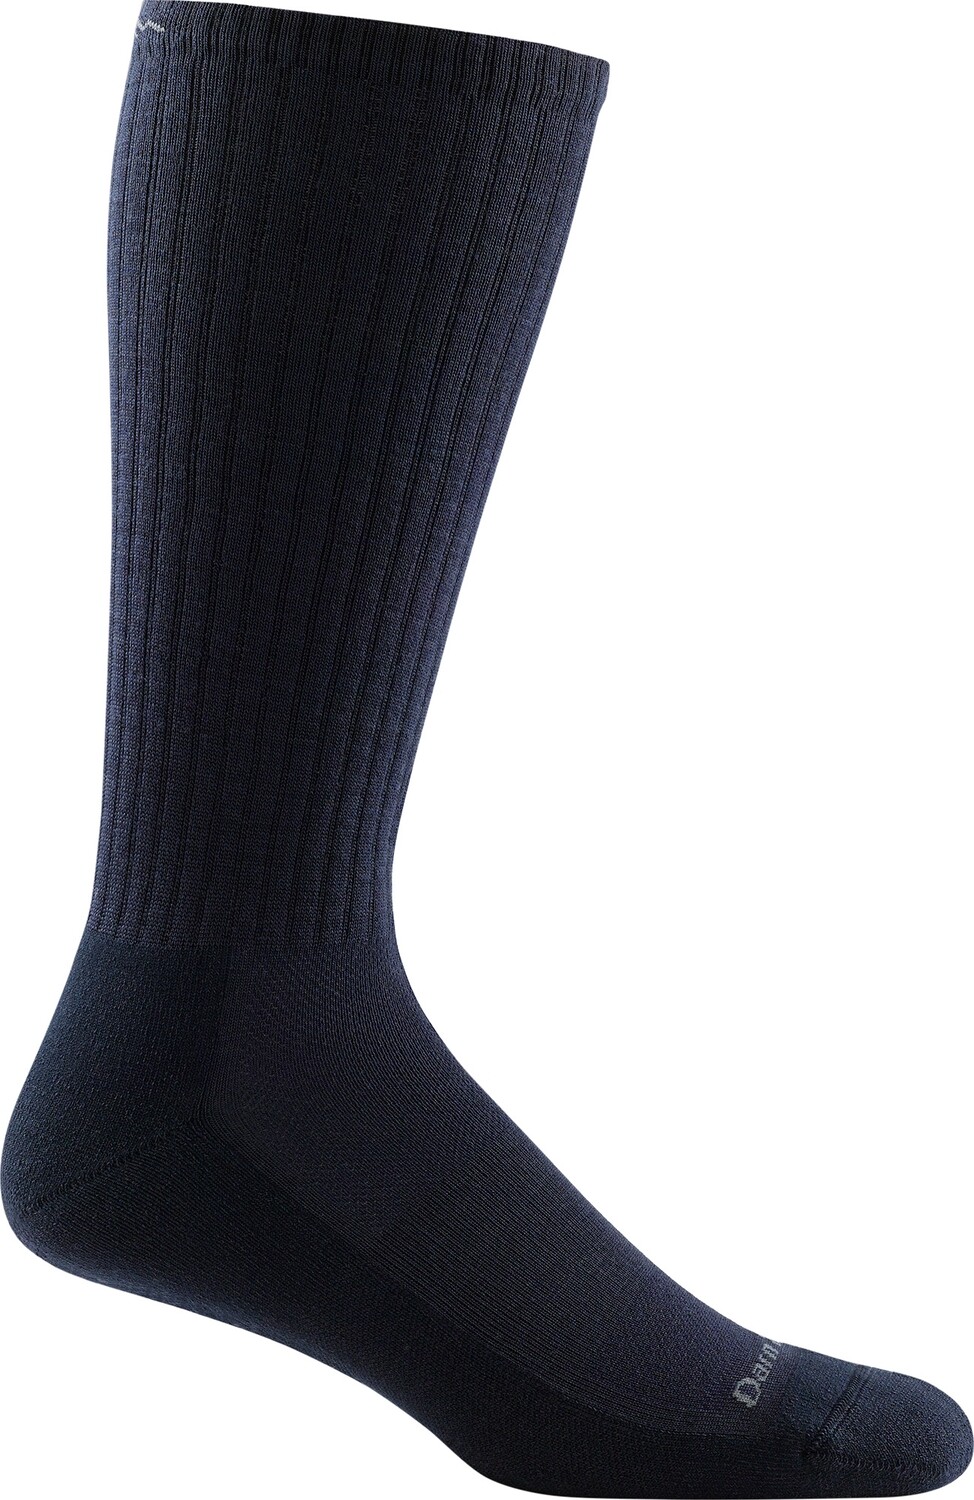 Men's/Unisex 1480 The Standard Mid-Calf Lightweight Lifestyle Sock